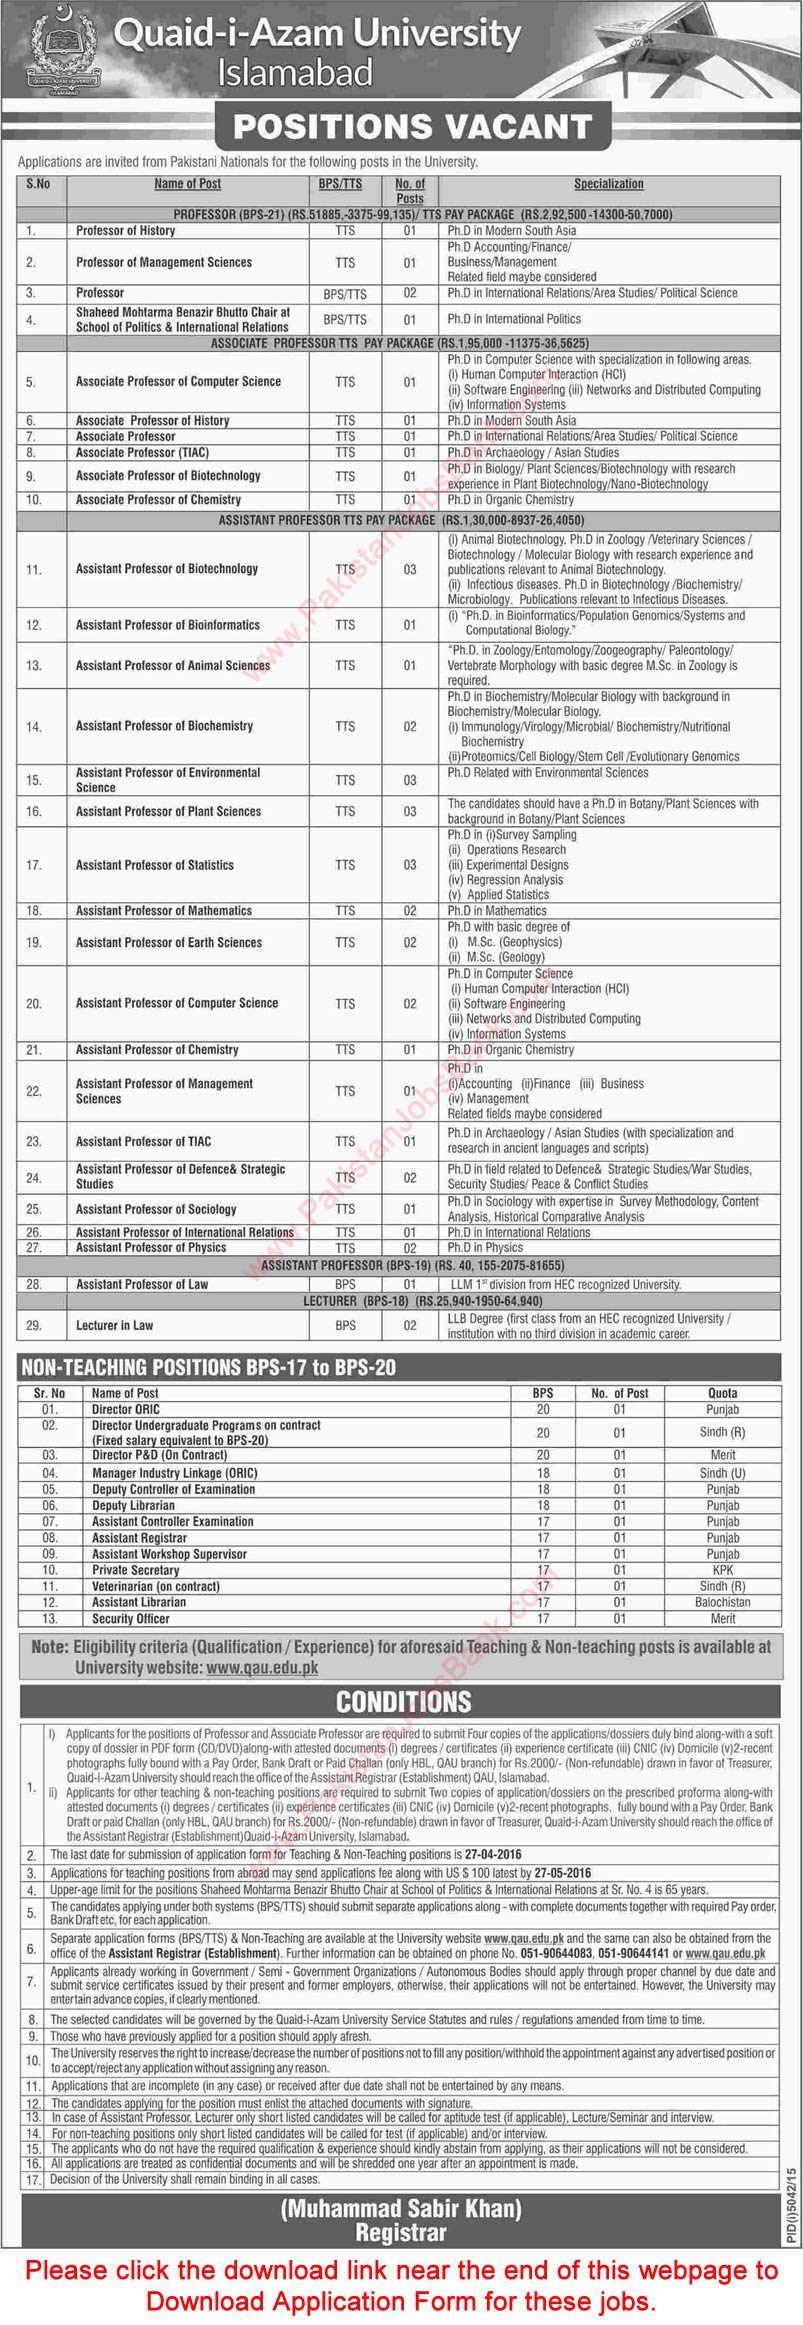 Quaid-e-Azam University Islamabad Jobs 2016 March / April QAU Application Form Download Latest